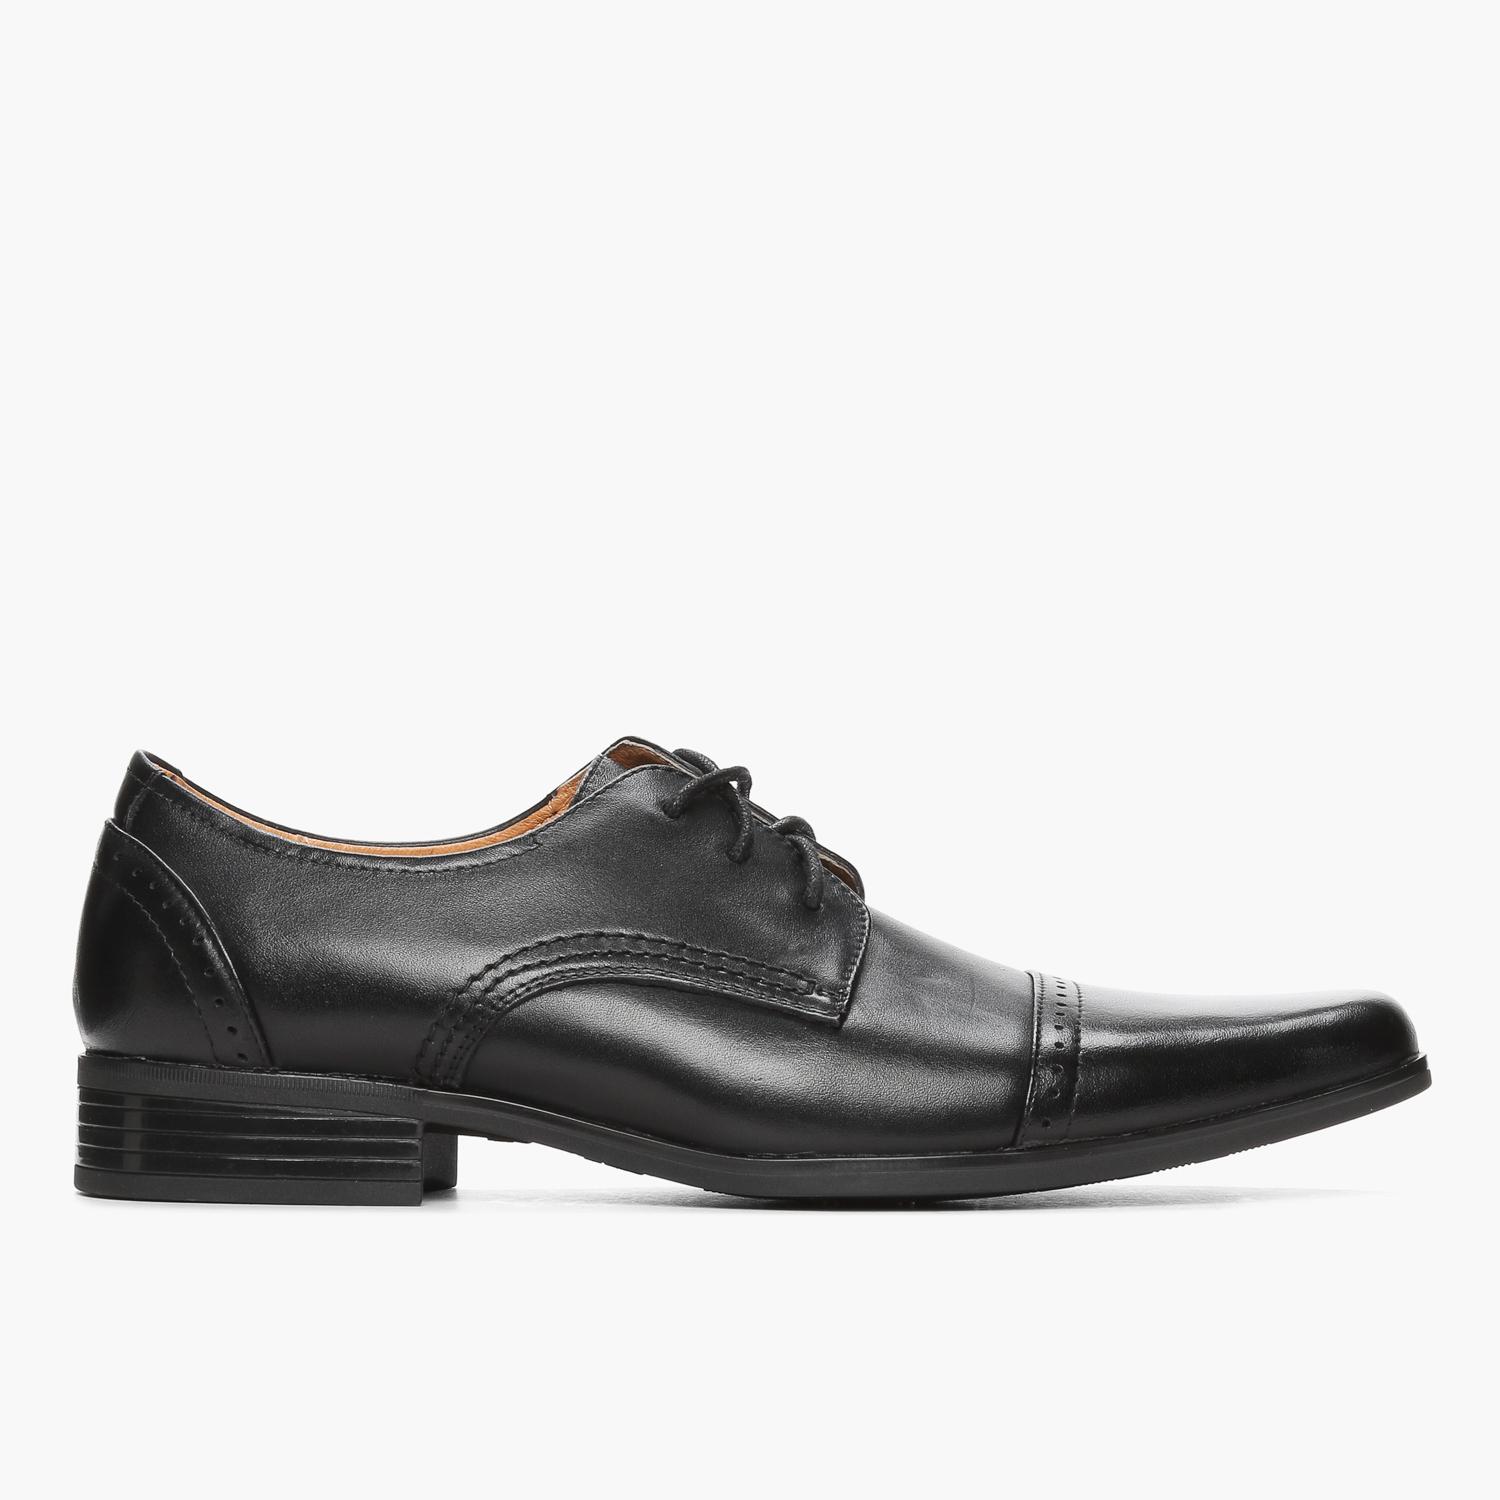 Arche обувь. Men Shoes Botticelli 2022. Philippe Anders j4983 men Shoes pan45. Camidy обувь. S.Oliver обувь.